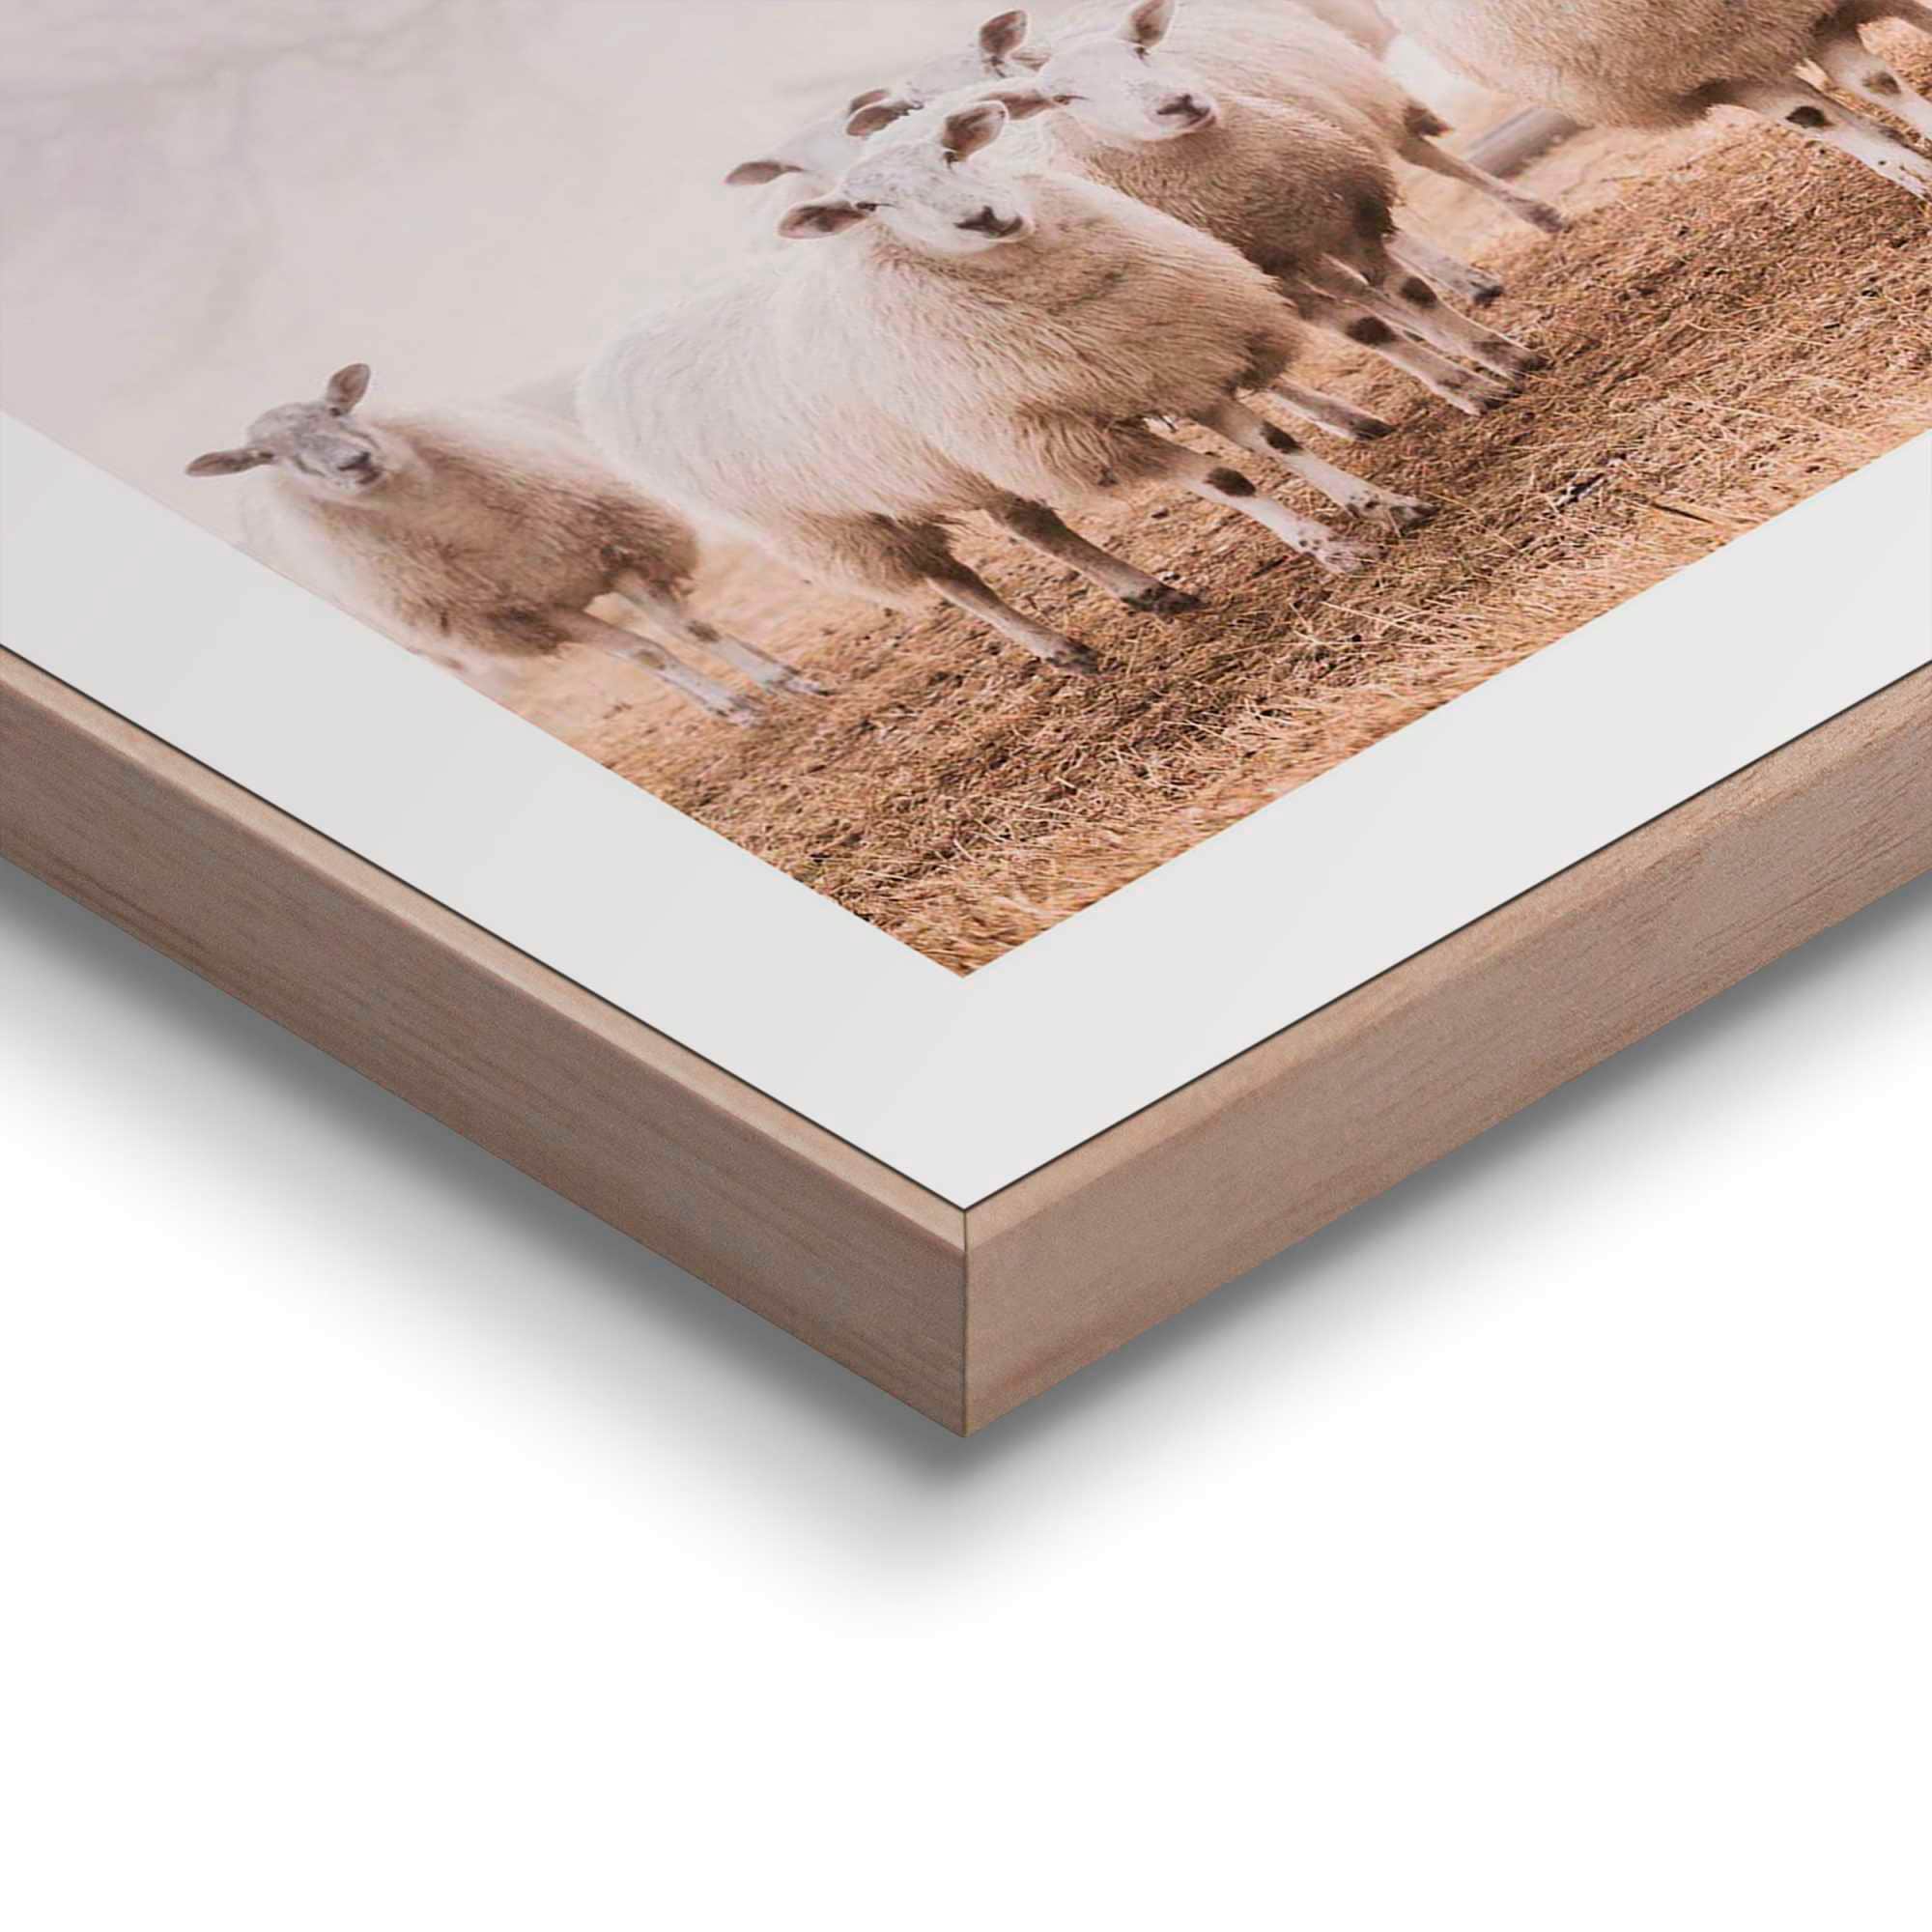 »Schafe Nebel« Reinders! bestellen online Poster im